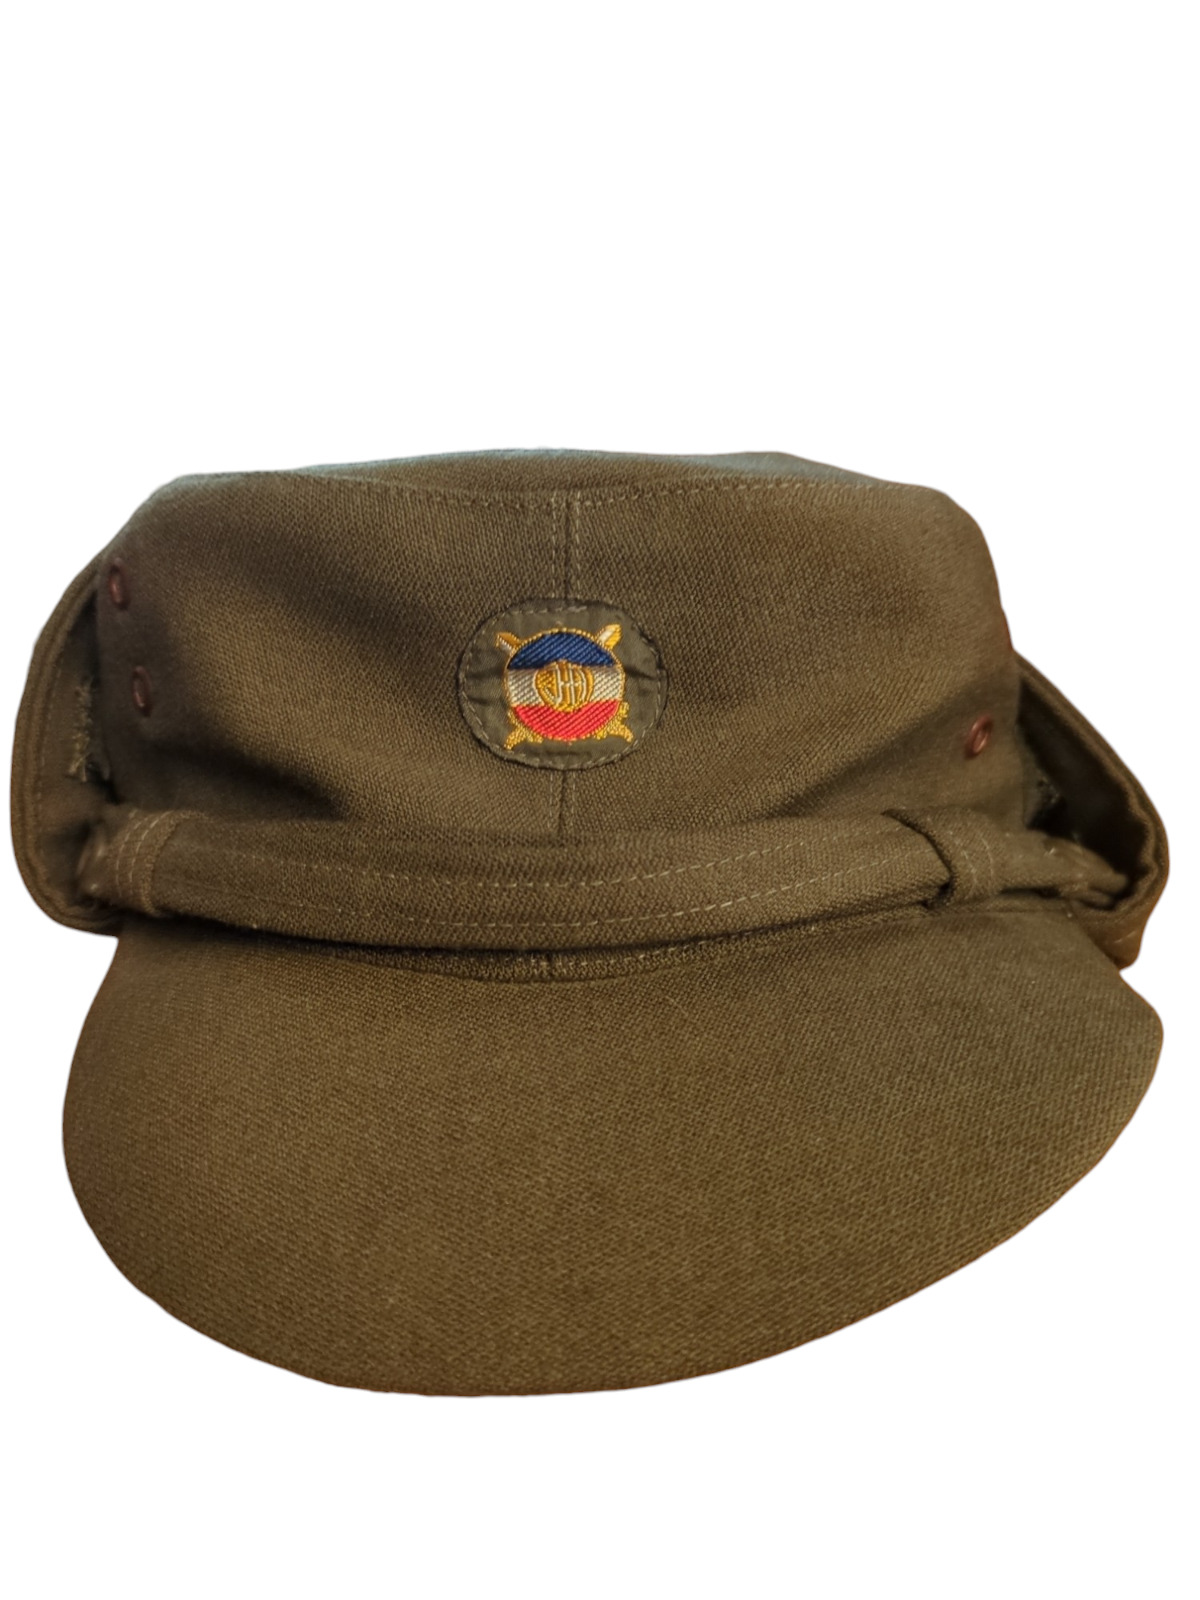 Yugoslavia; Yugoslav Peoples Army (JNA) Forage cap. Circa. 1991-2001 size 56